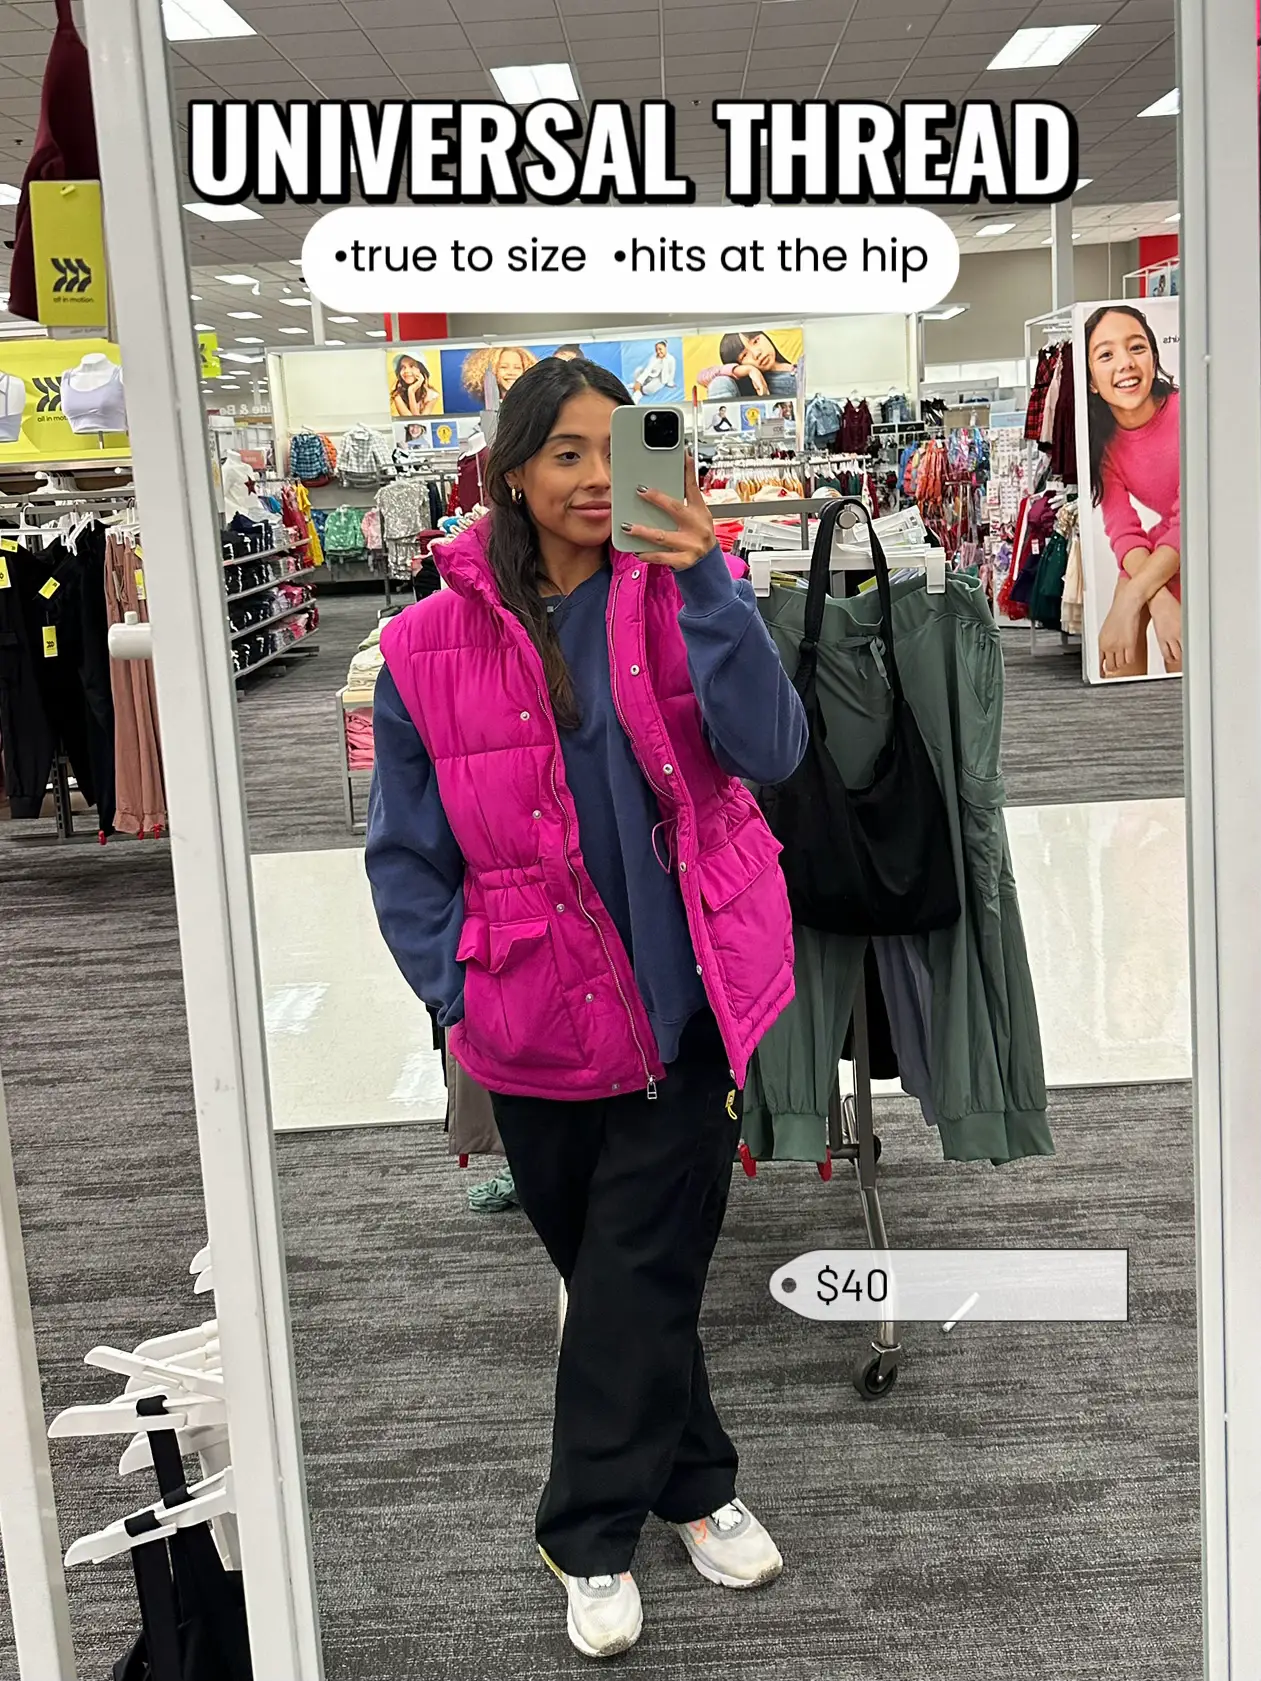  A woman in a pink jacket is taking a selfie in a mirror.